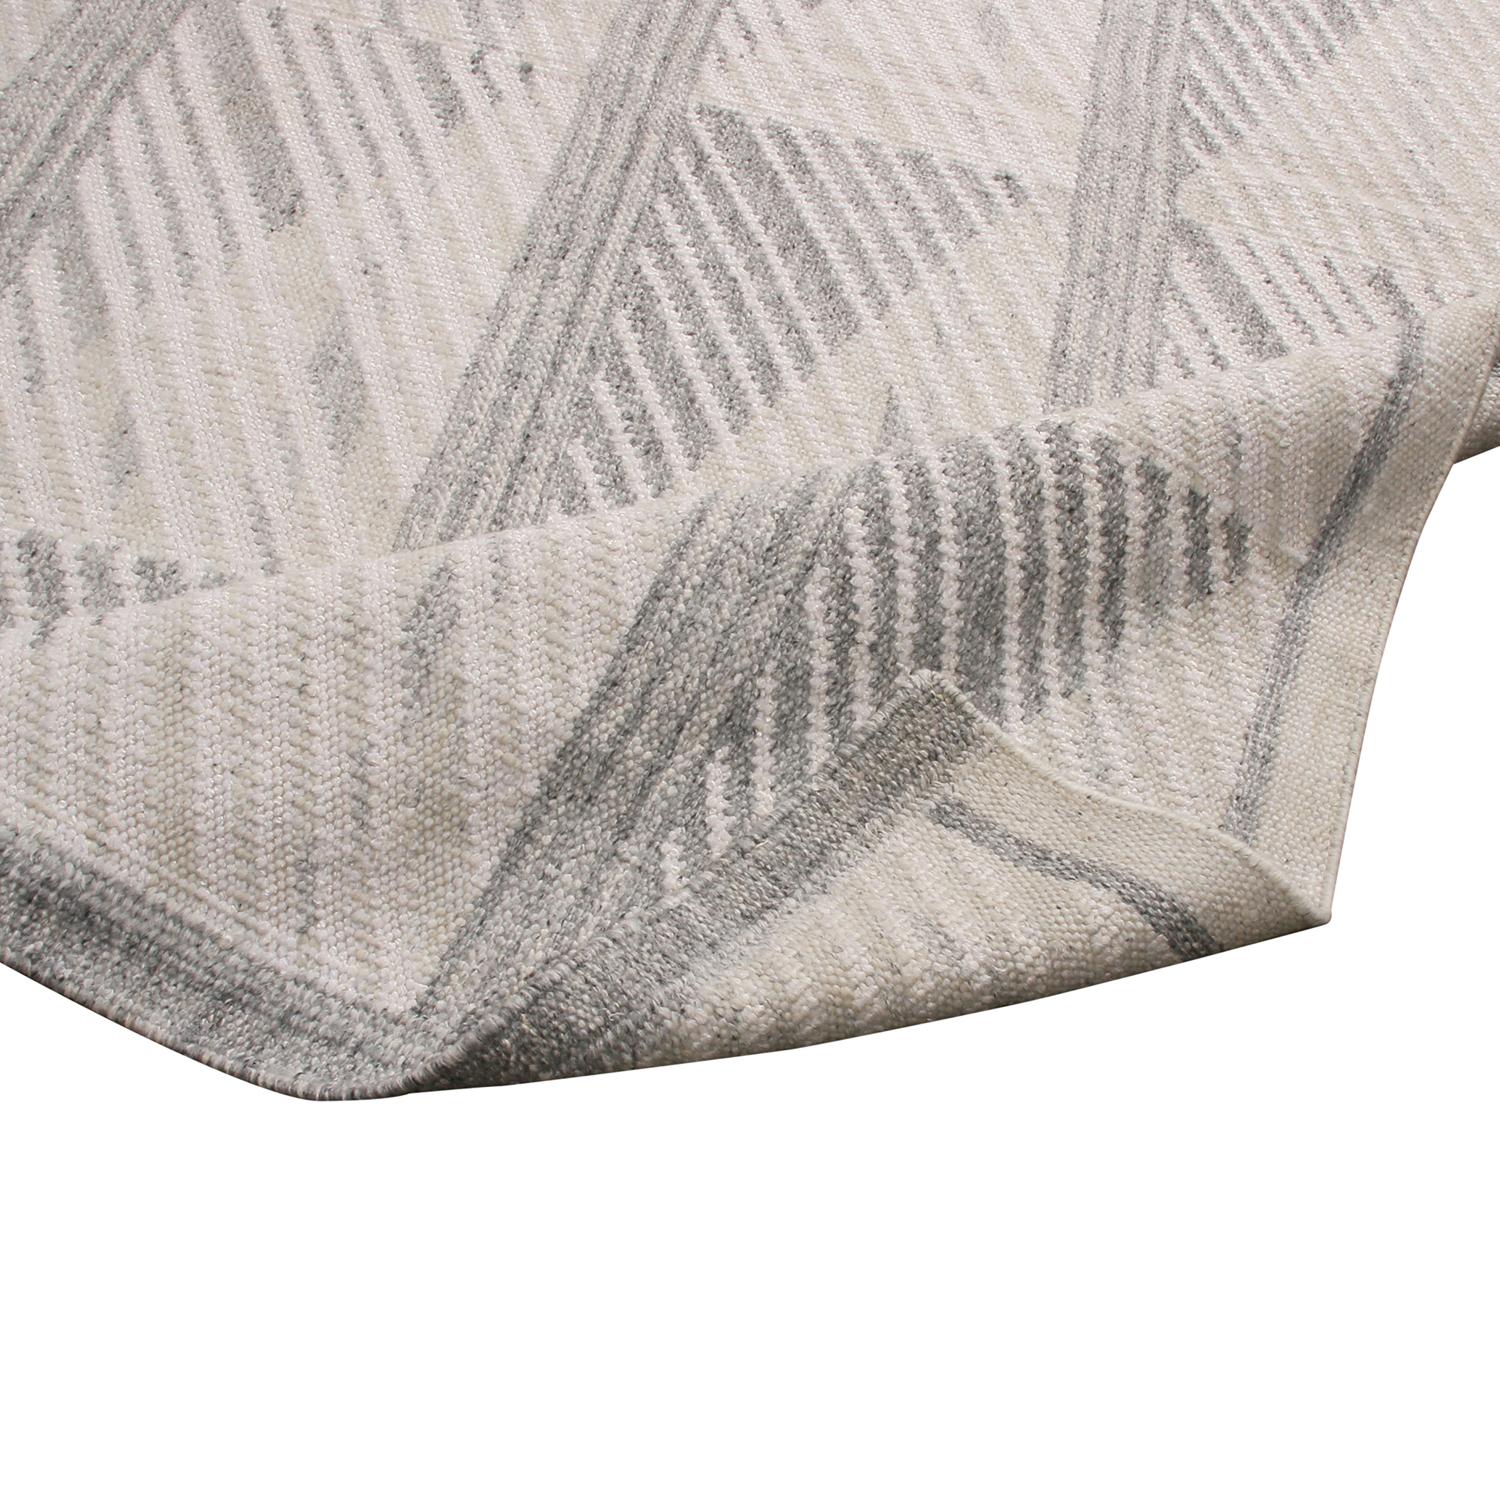 Hand-Woven Rug & Kilim’s Scandinavian-Inspired Geometric Gray-White Natural Wool Kilim Rug For Sale